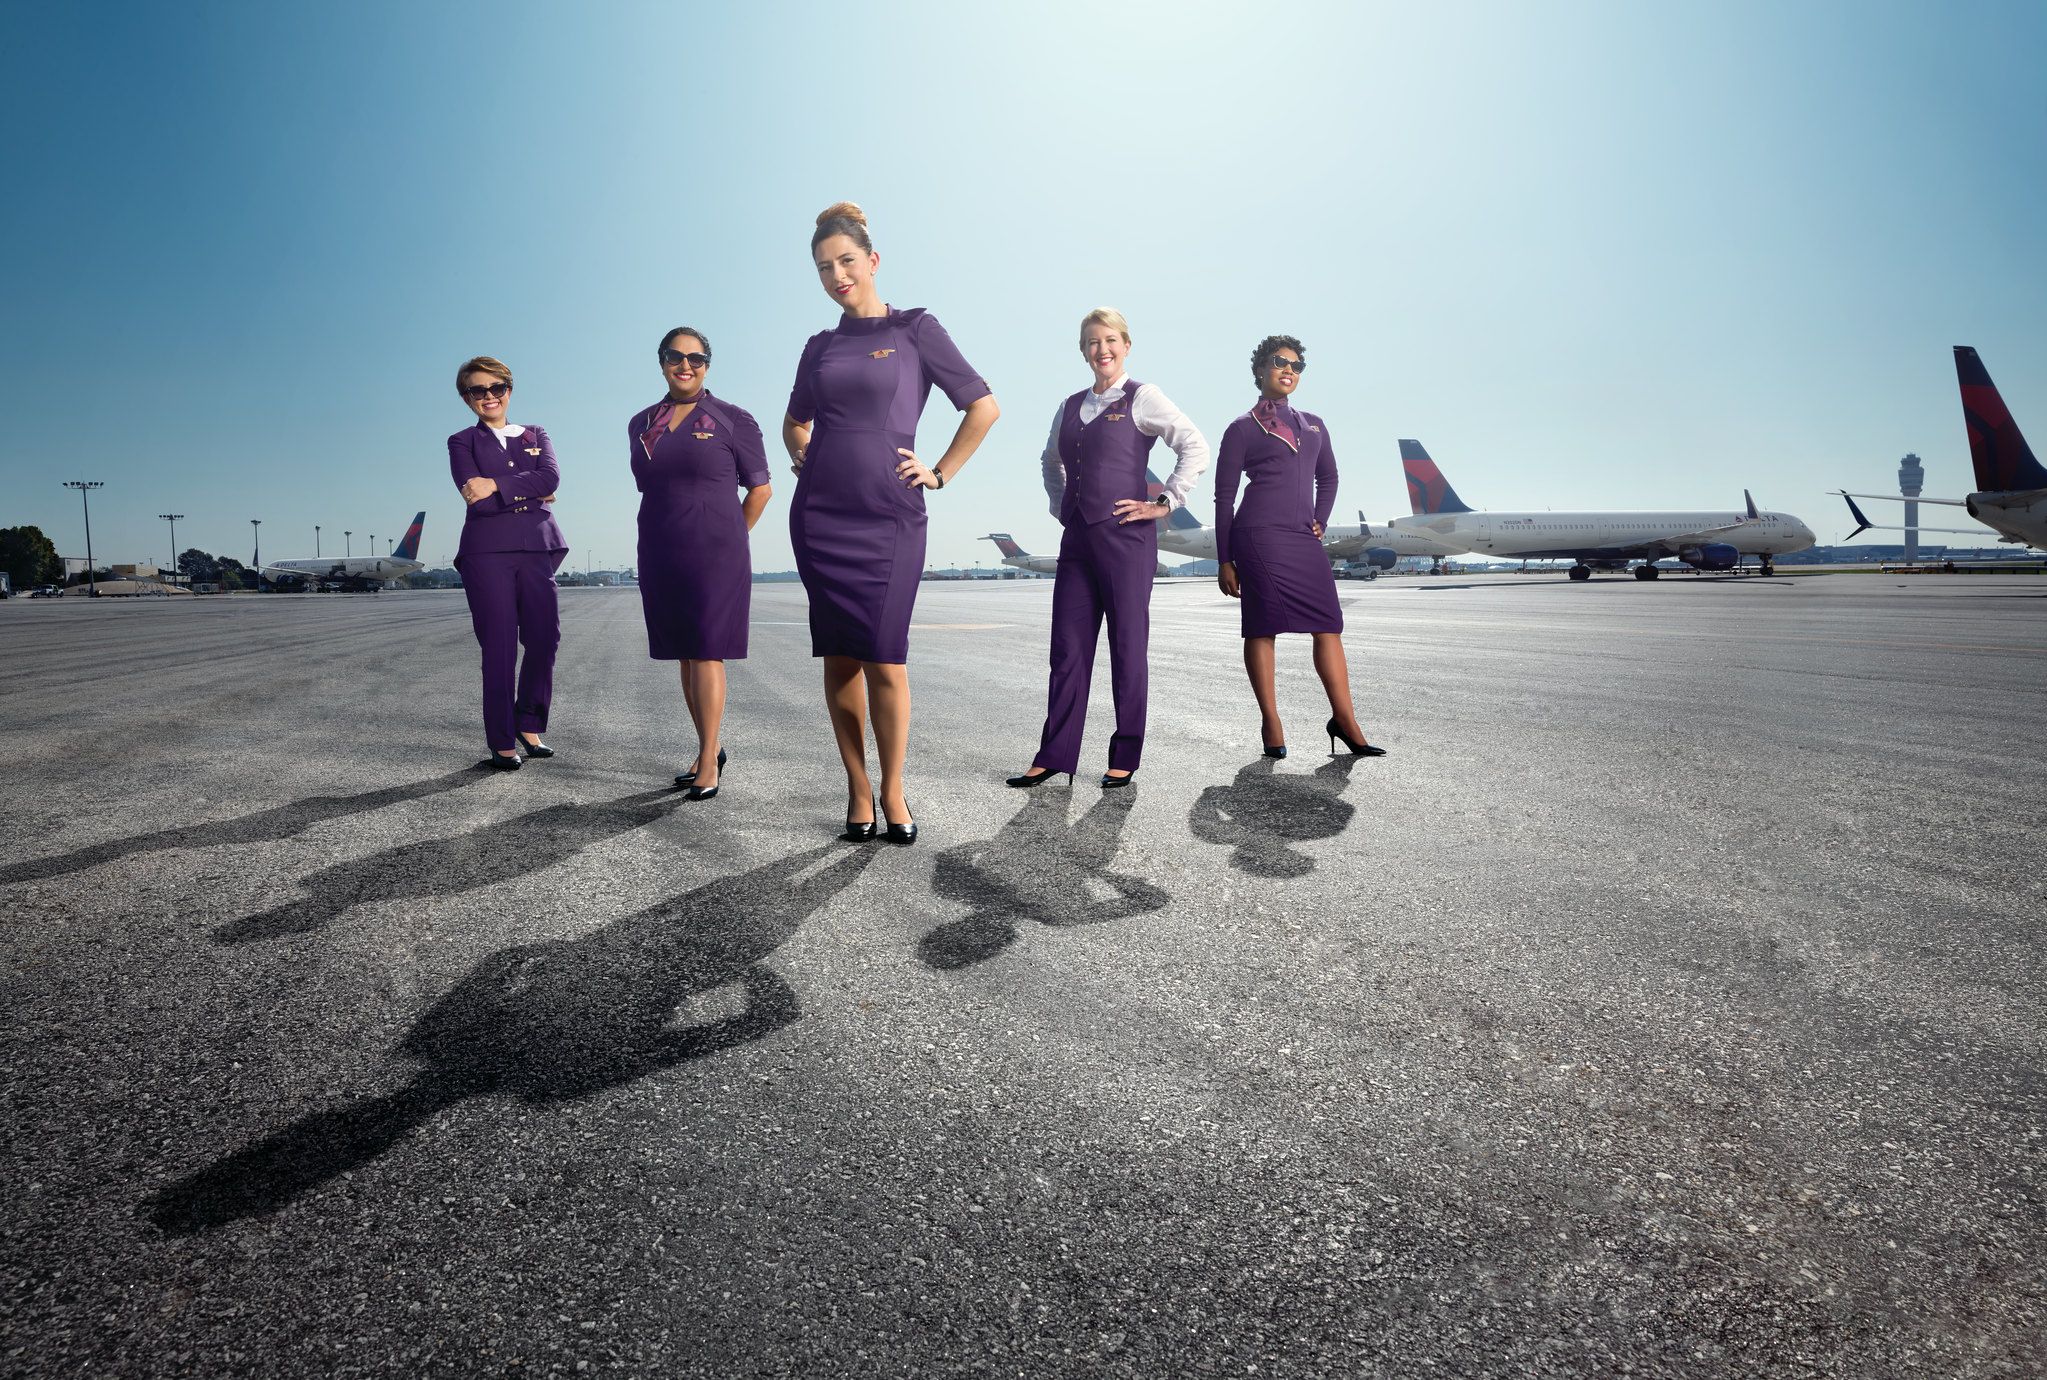 Delta Flight Attendants in Uniform on A Hot Tarmac With Delta Air Lines Jets